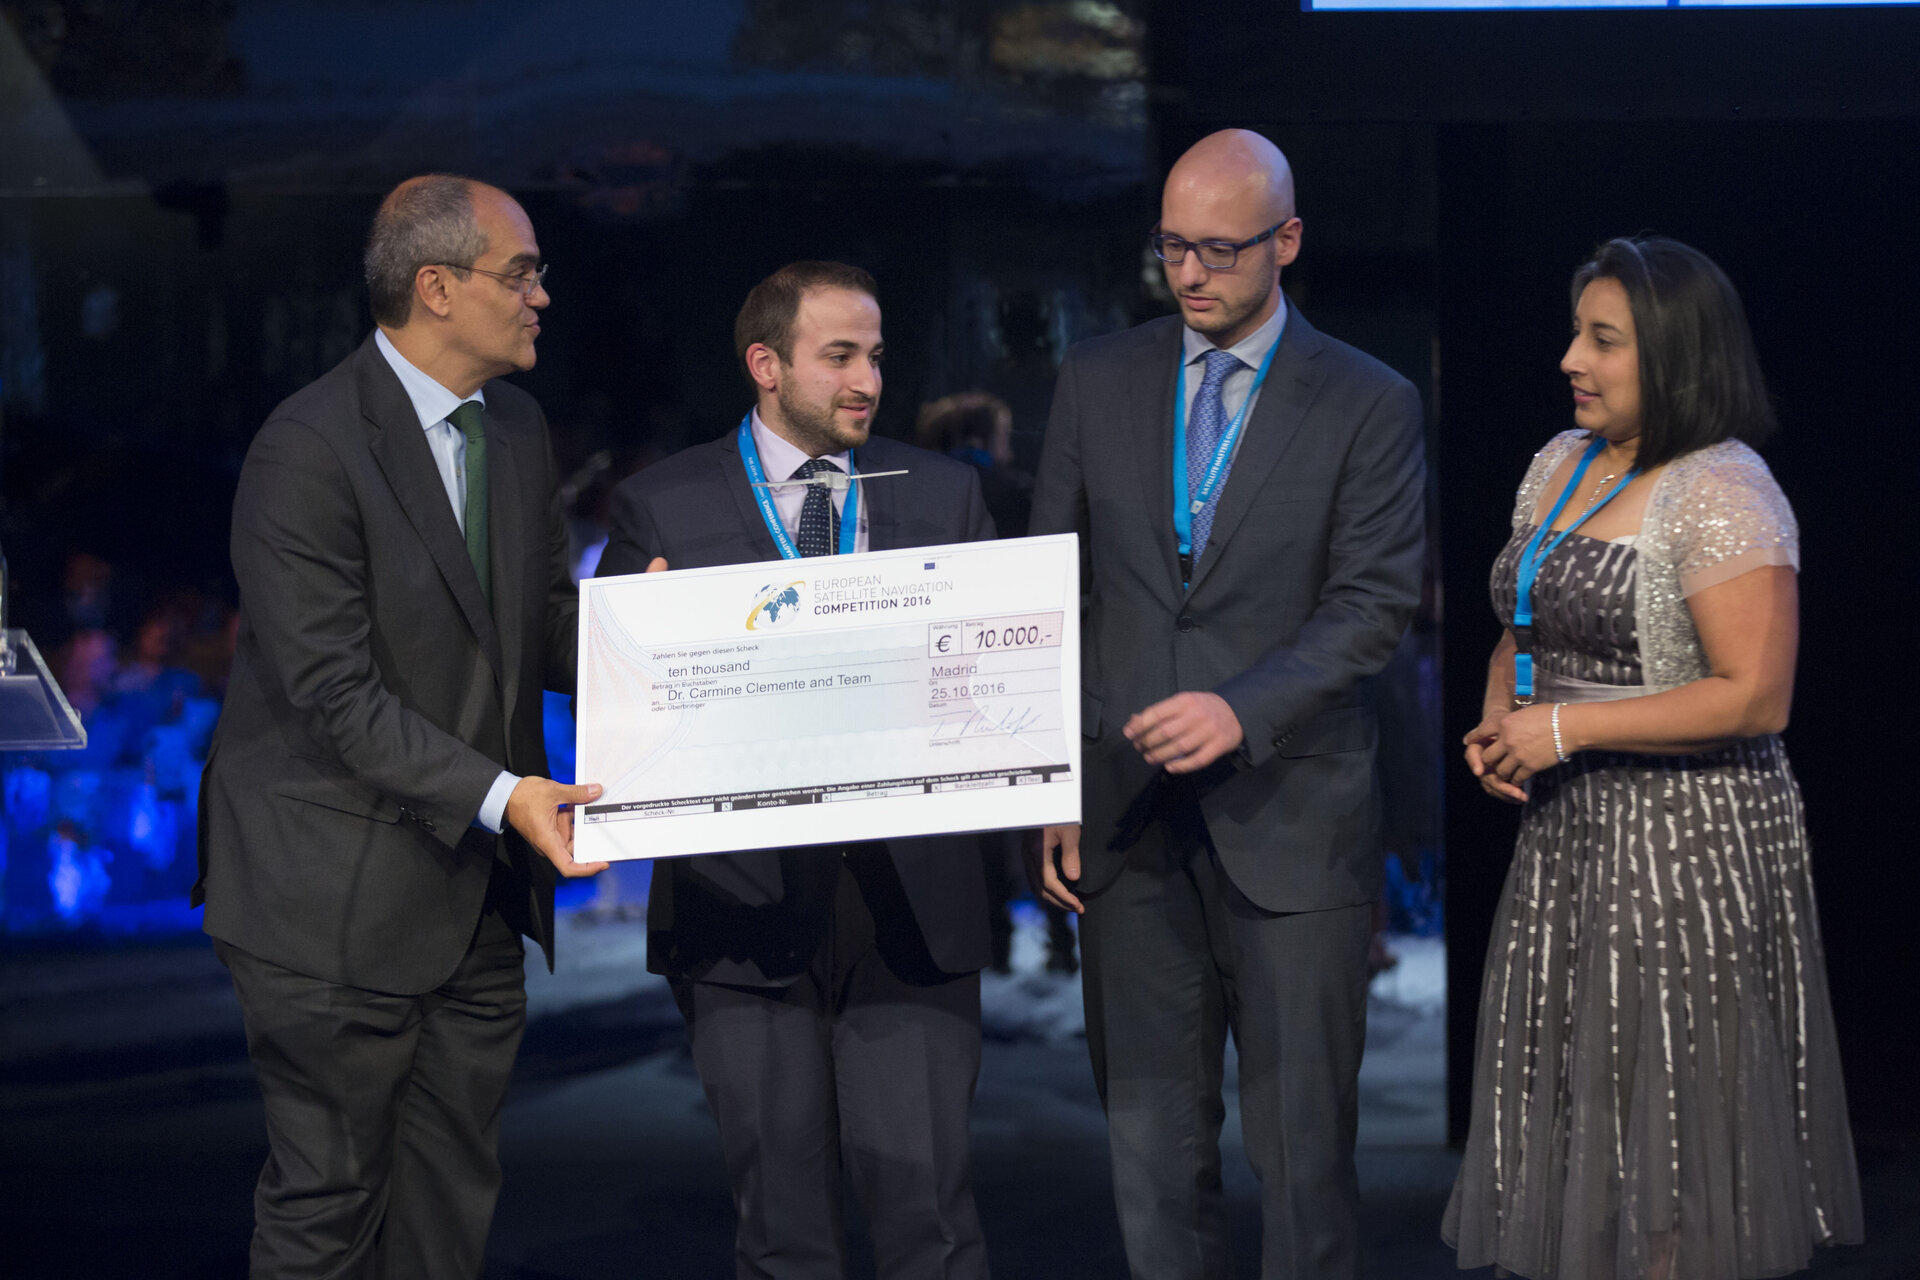 2016 European Satellite Navigation Competition grand prizewinners